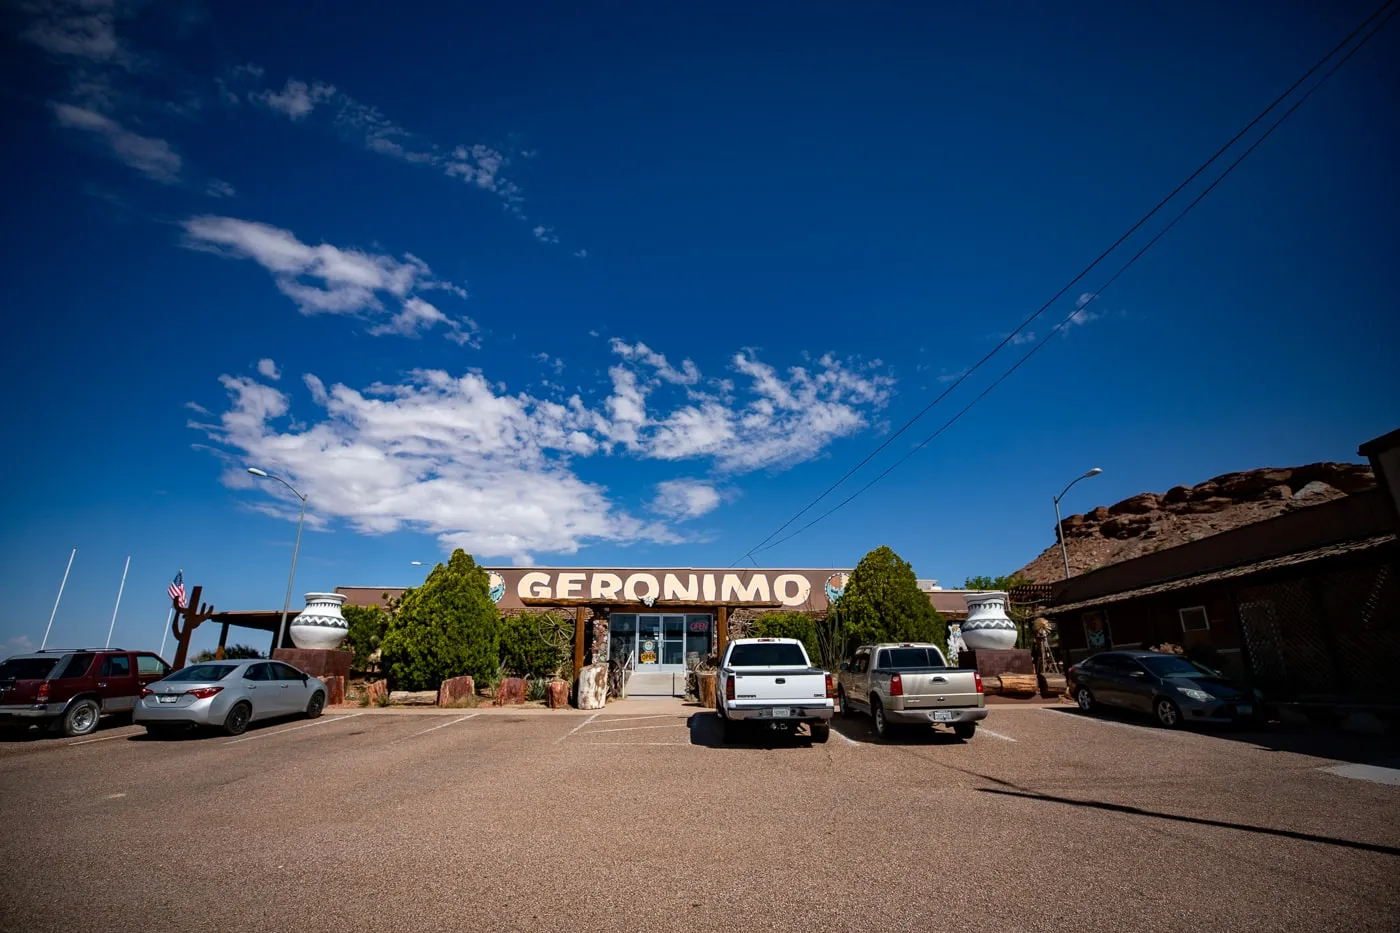 Geronimo Trading Post in Joseph City, Arizona on Route 66 - World's Largest Petrified Tree